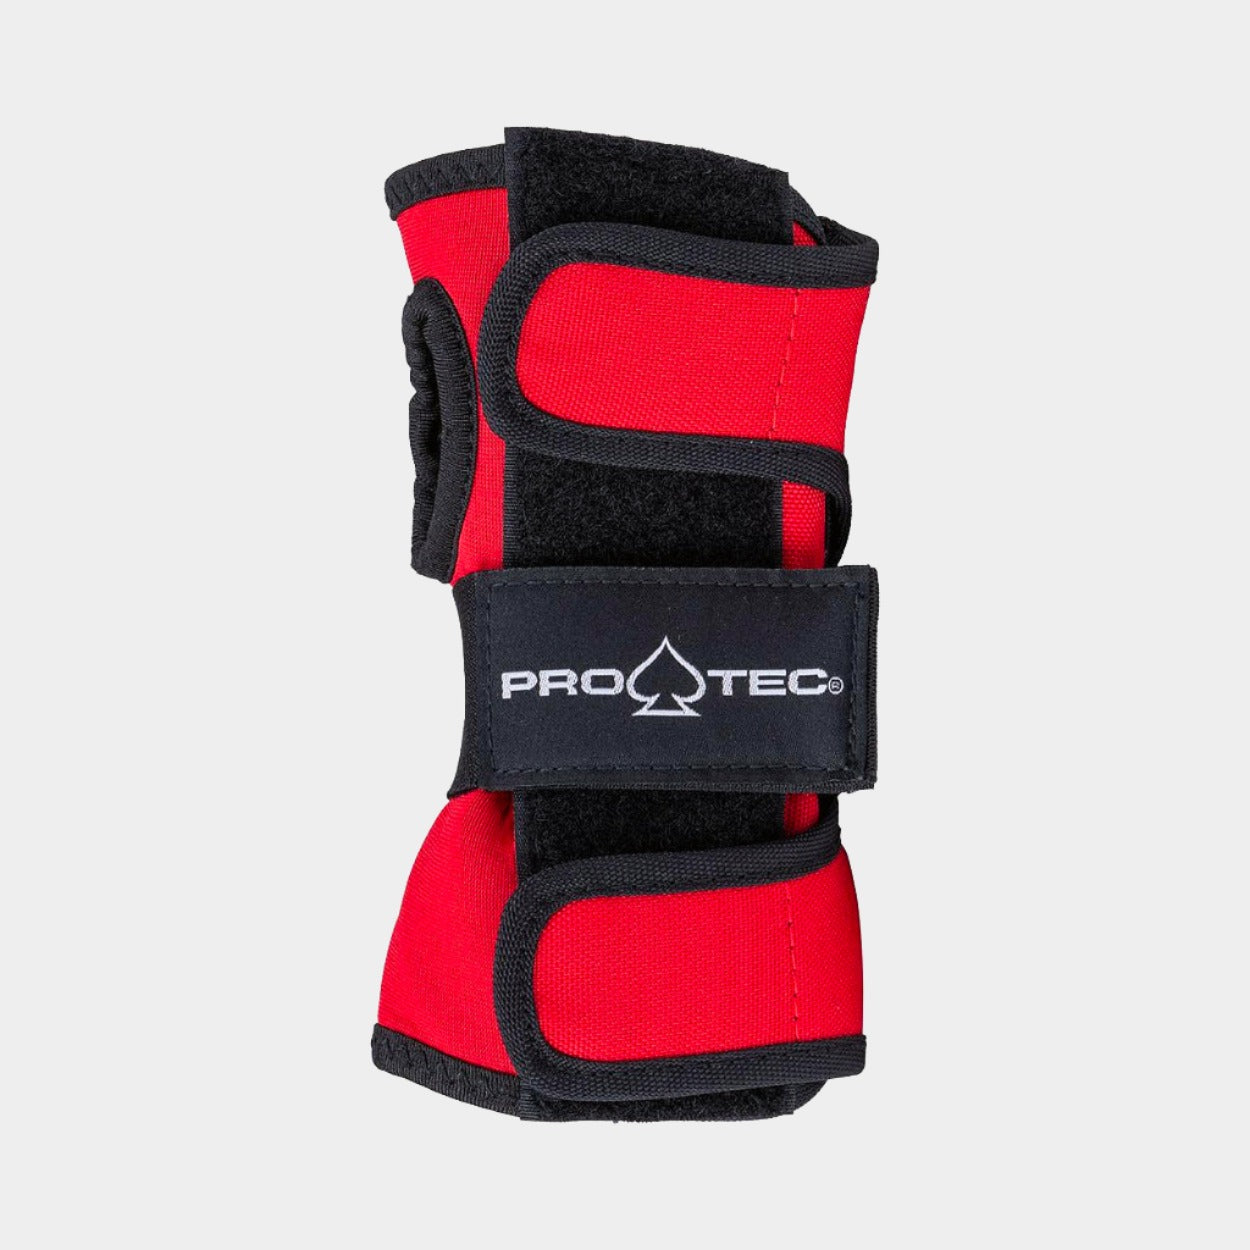 Pro-Tec Pads Street Wrist Guard - Red/Black - Prime Delux Store